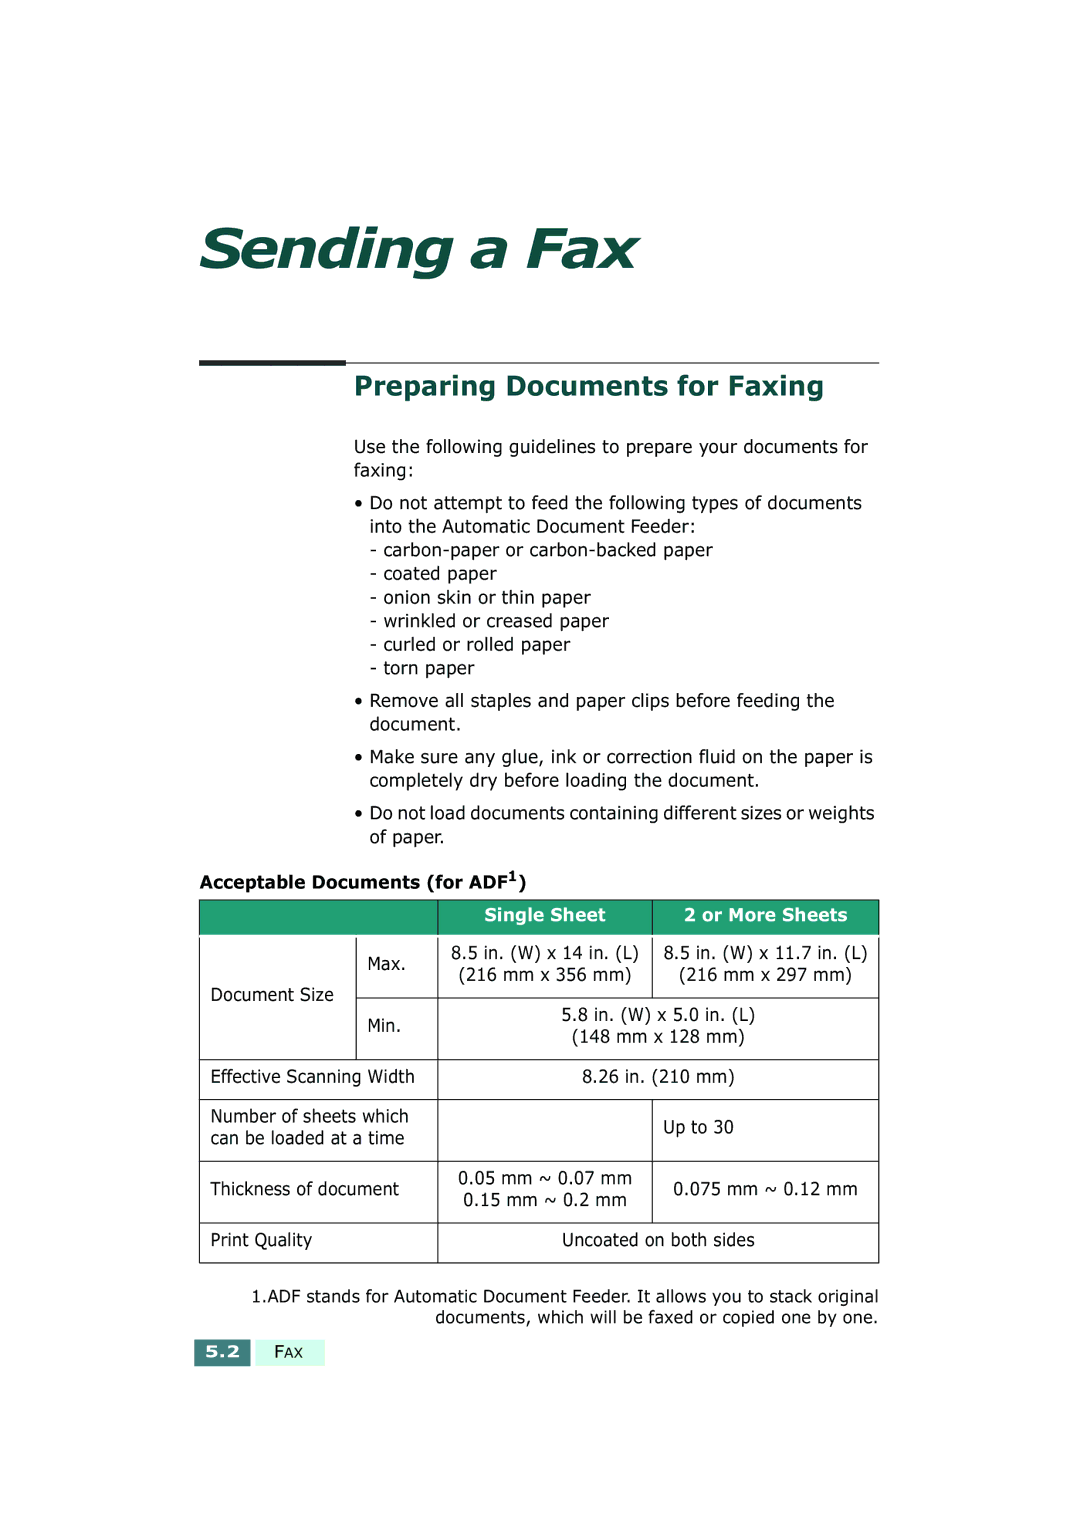 Samsung SF-430 manual Preparing Documents for Faxing, Acceptable Documents for ADF1, Max, Document Size Min, Print Quality 